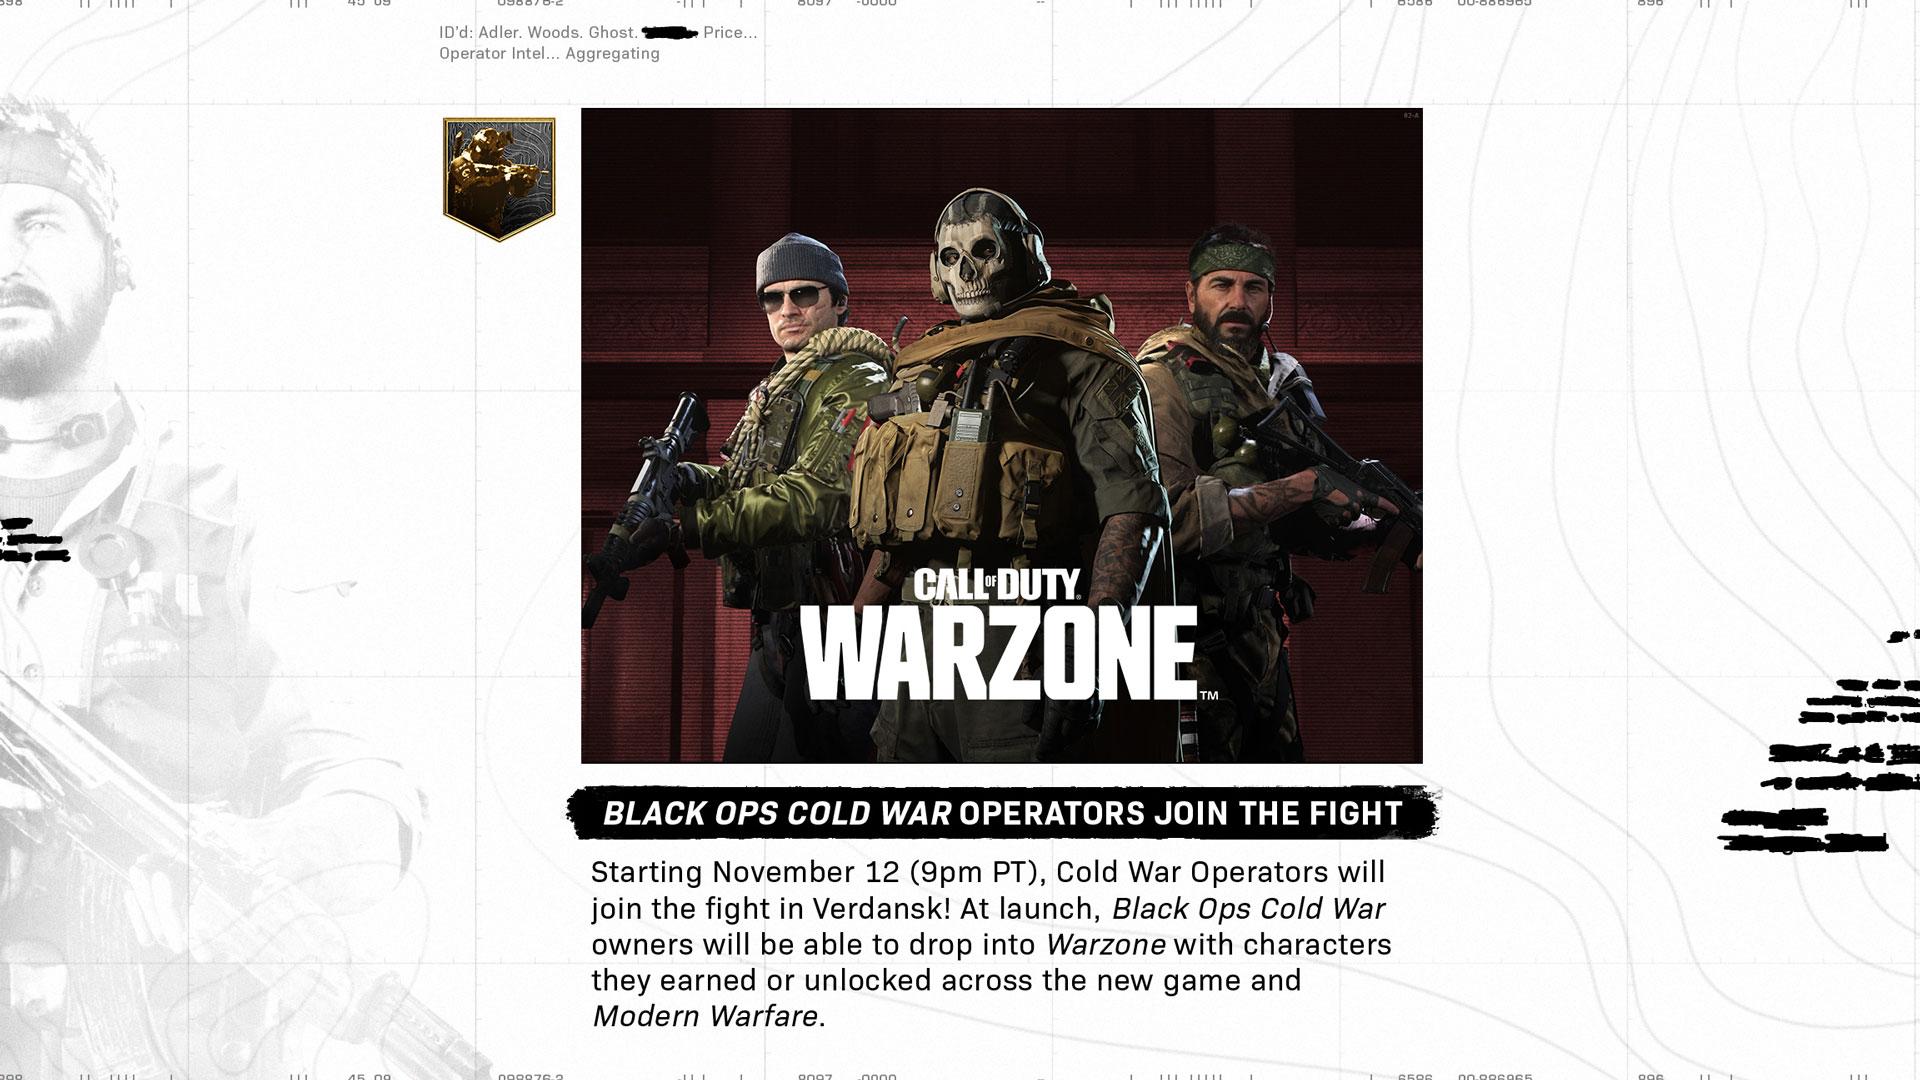 warzone black ops cold war modern warfare operators